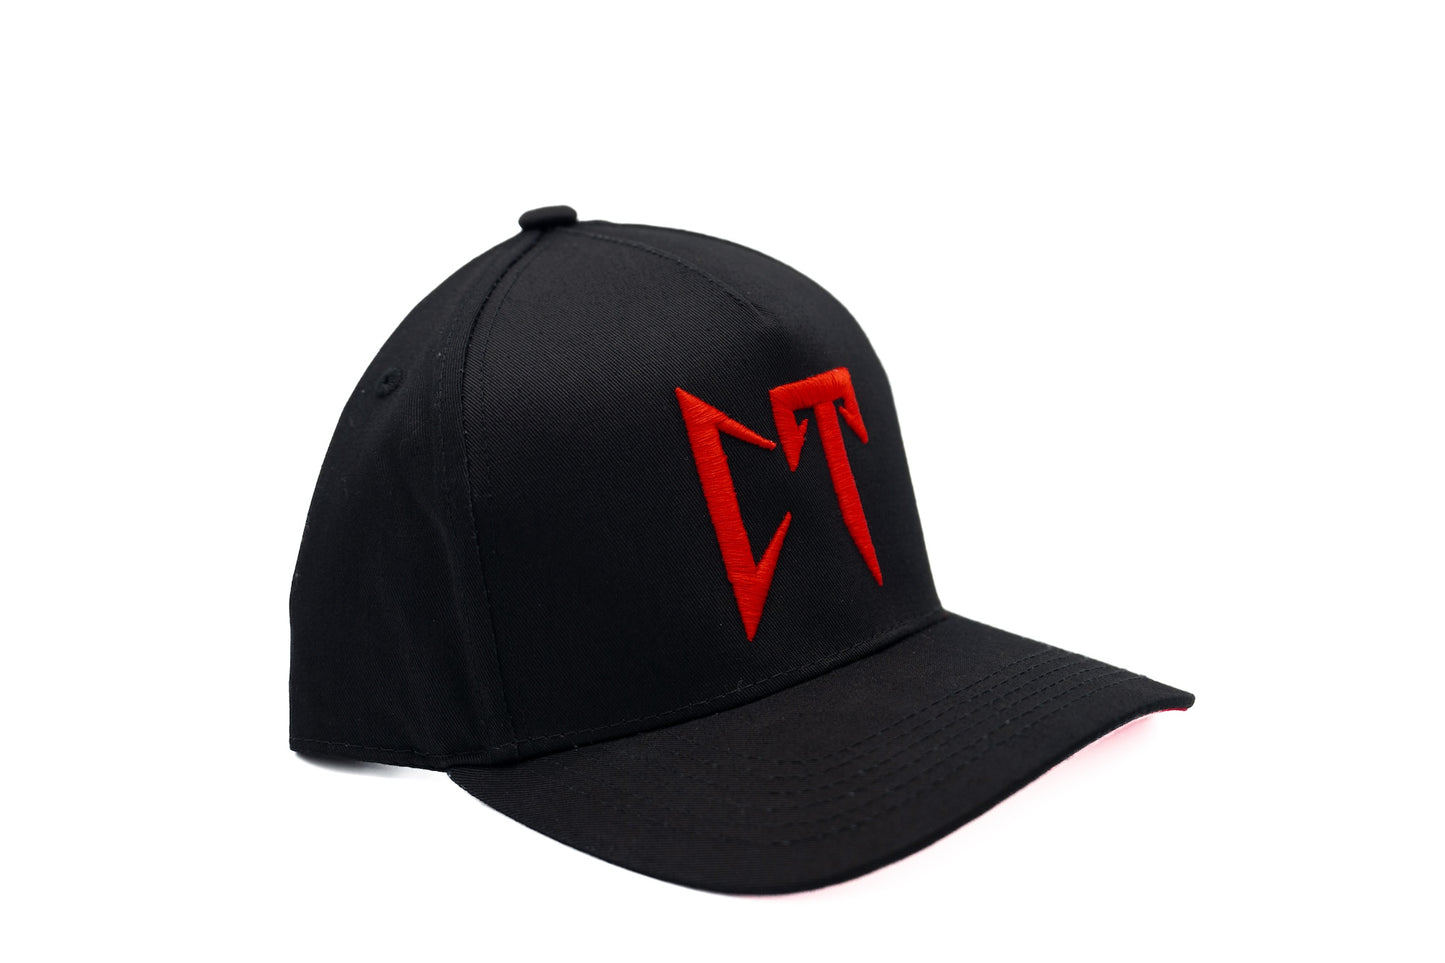 CT Hat (Black/Red)